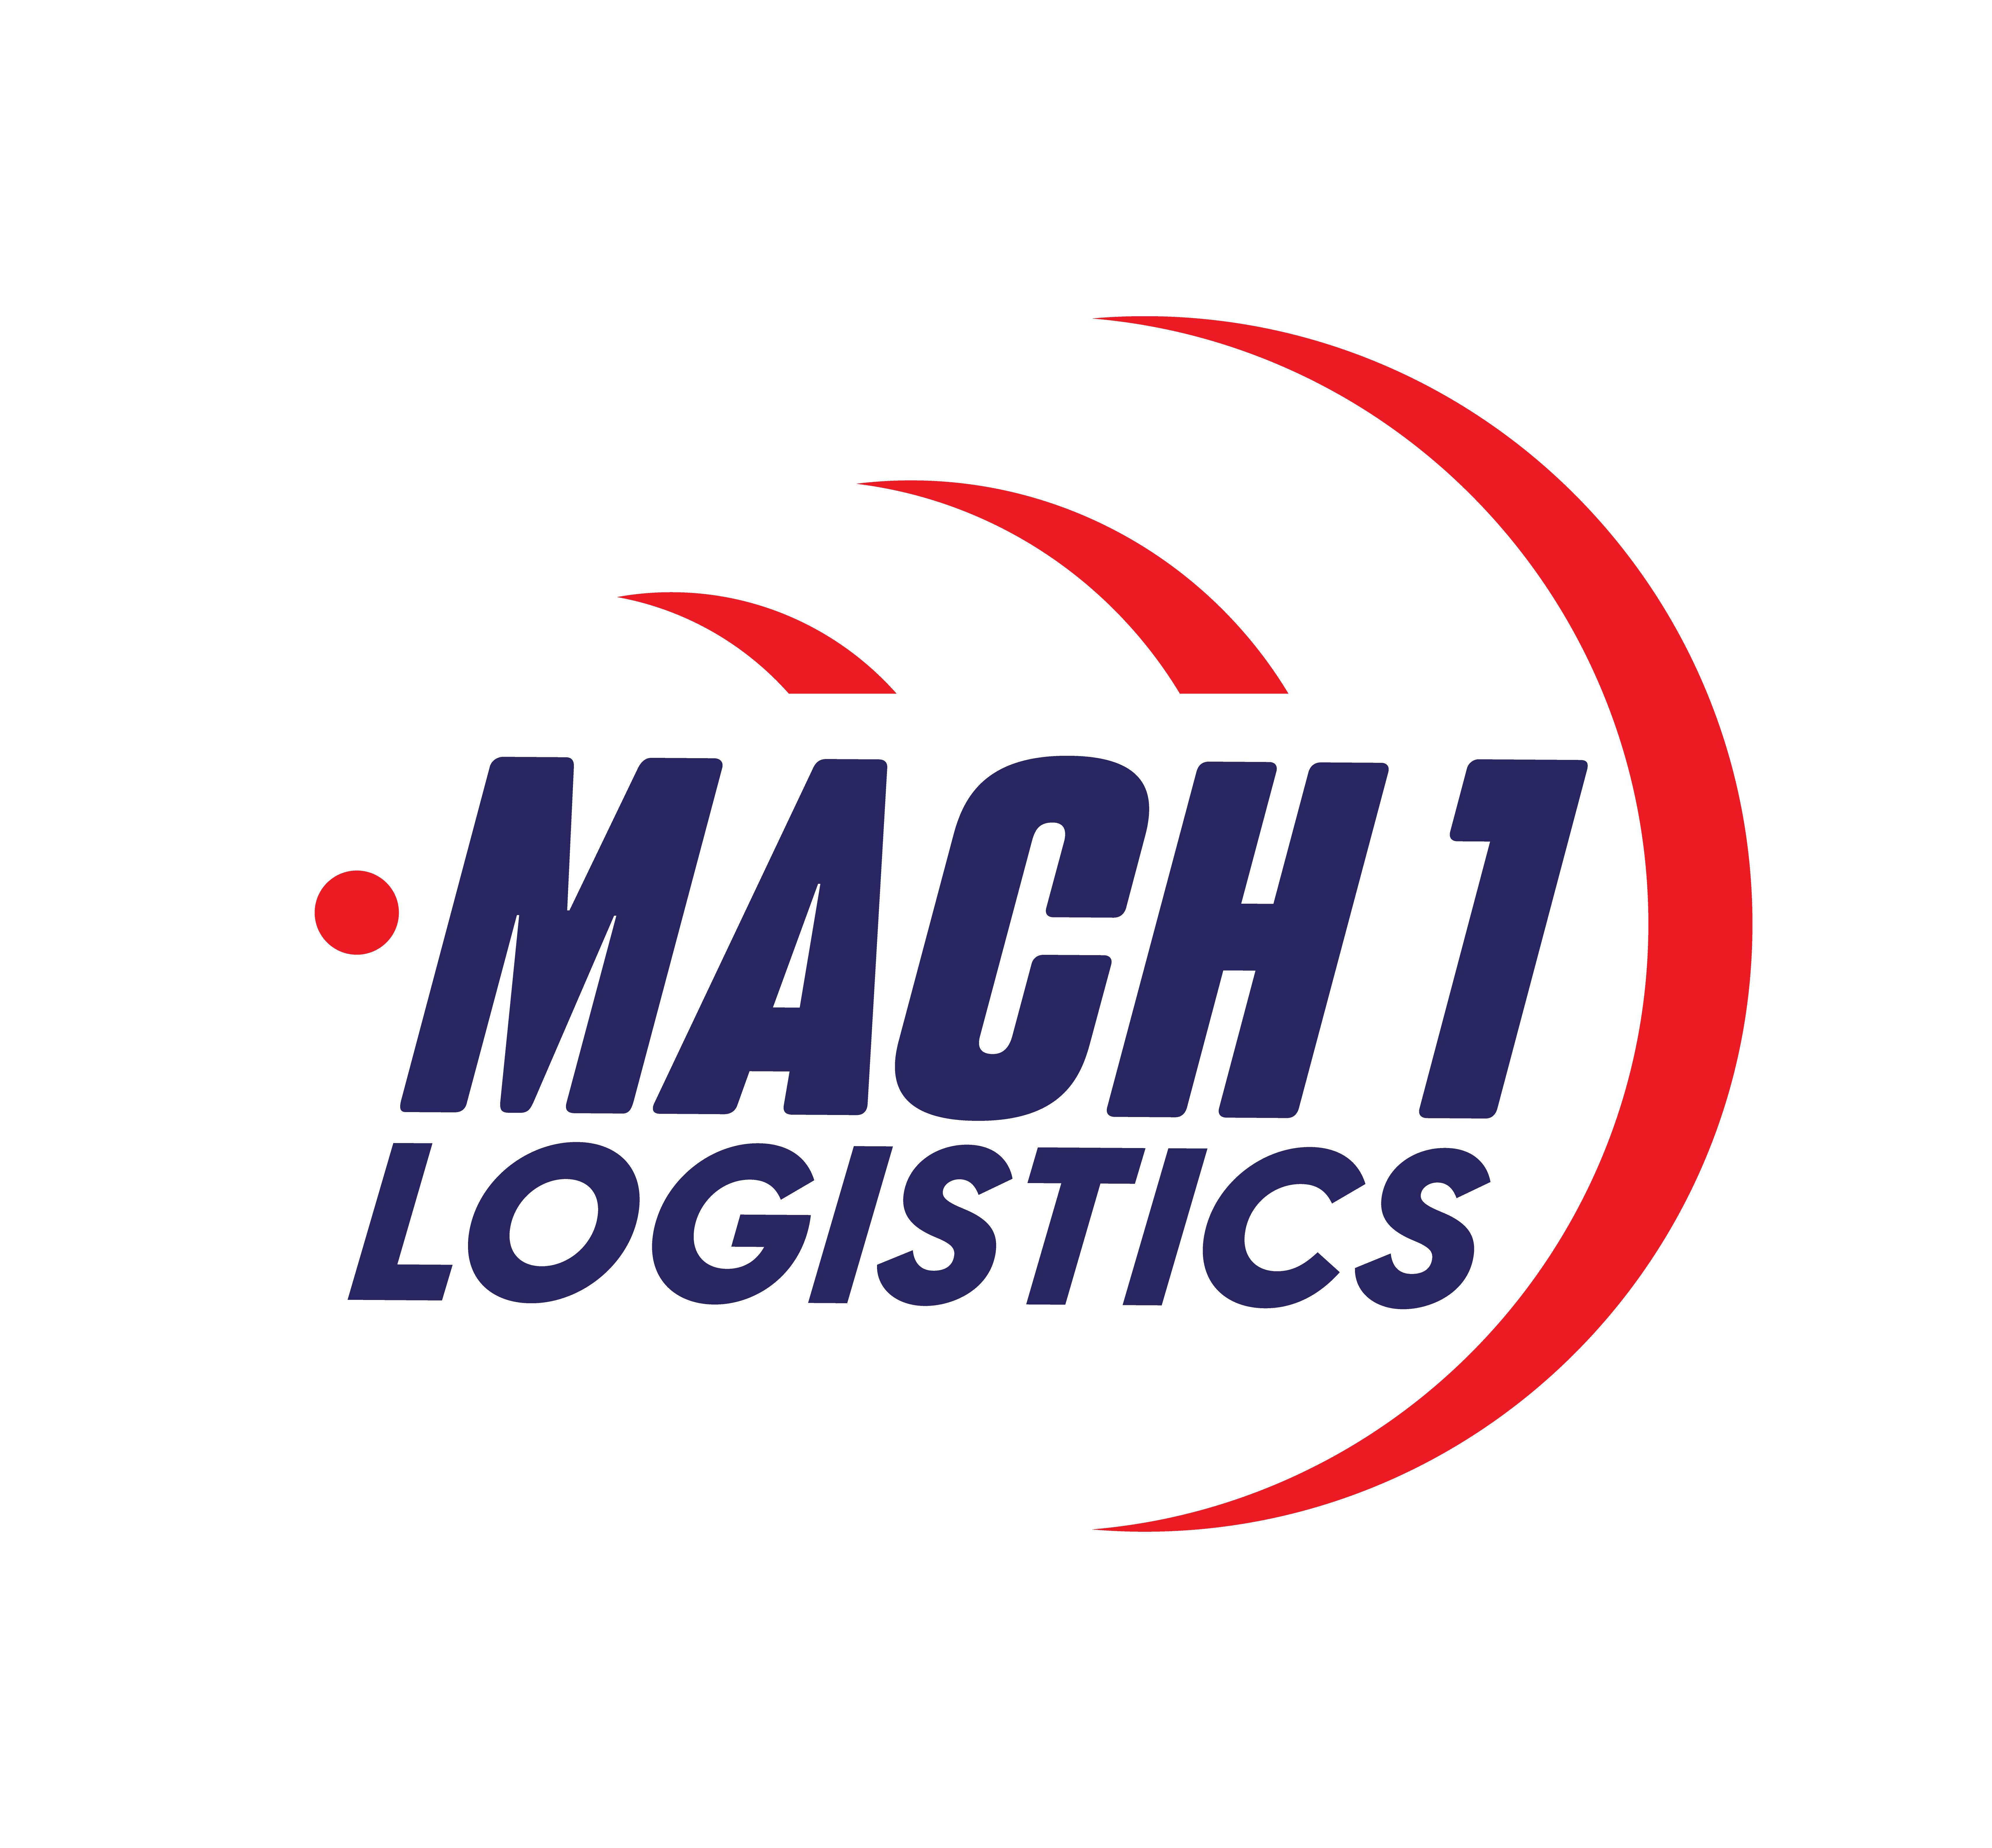 Mach1 Logistics